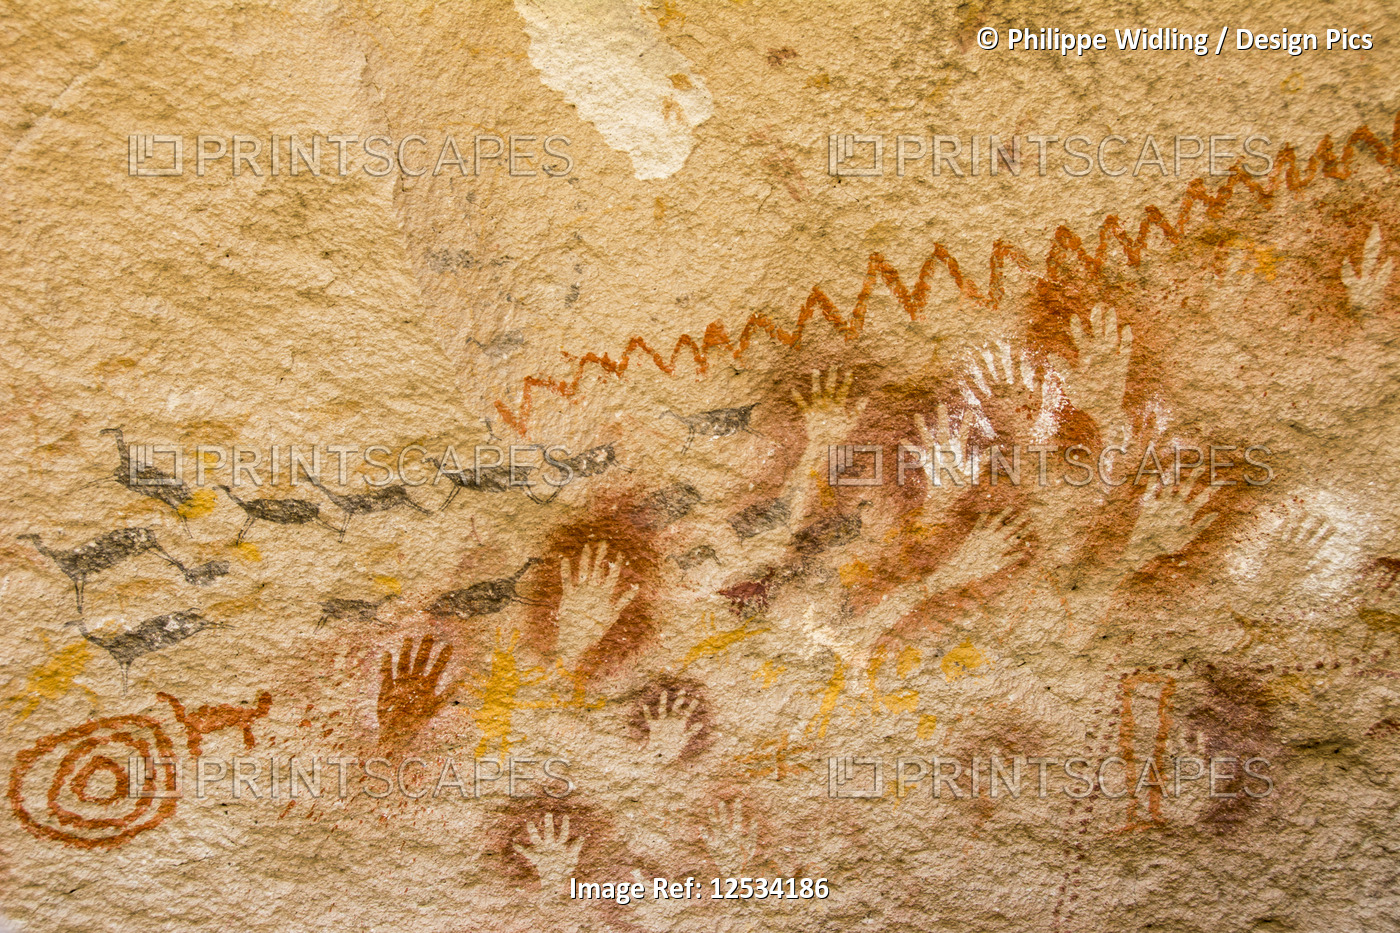 Colourful pictograms and handprints on a rock face; Santa Cruz, Argentina